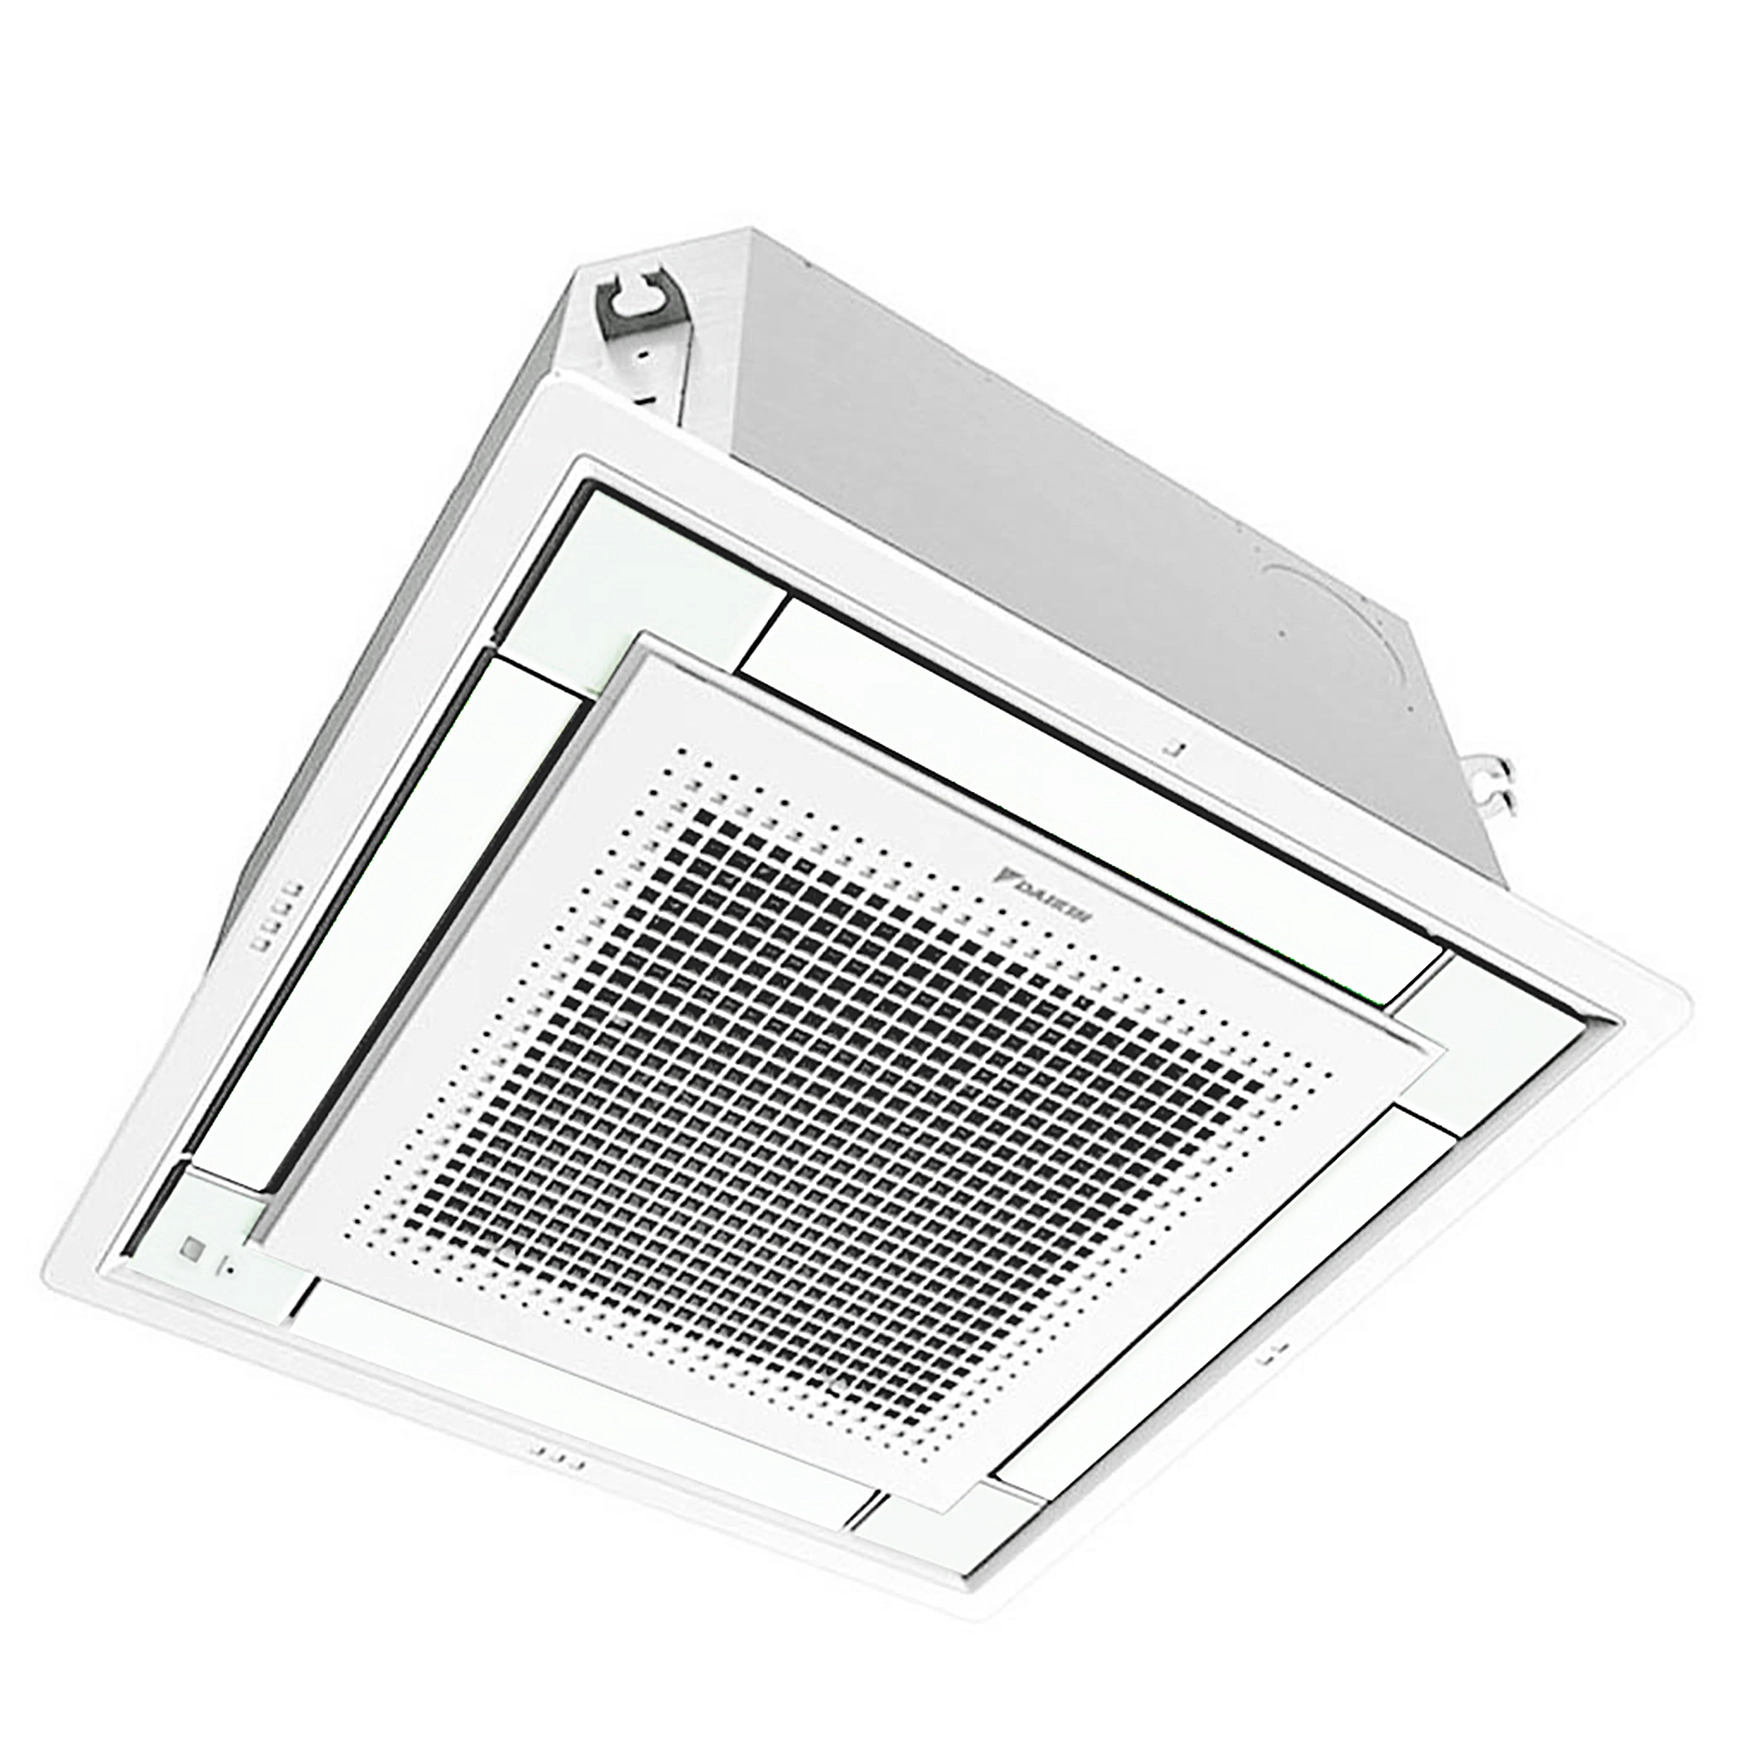 Daikin ceiling mounted air conditioning FFFC50AVM inverter (2.0Hp)